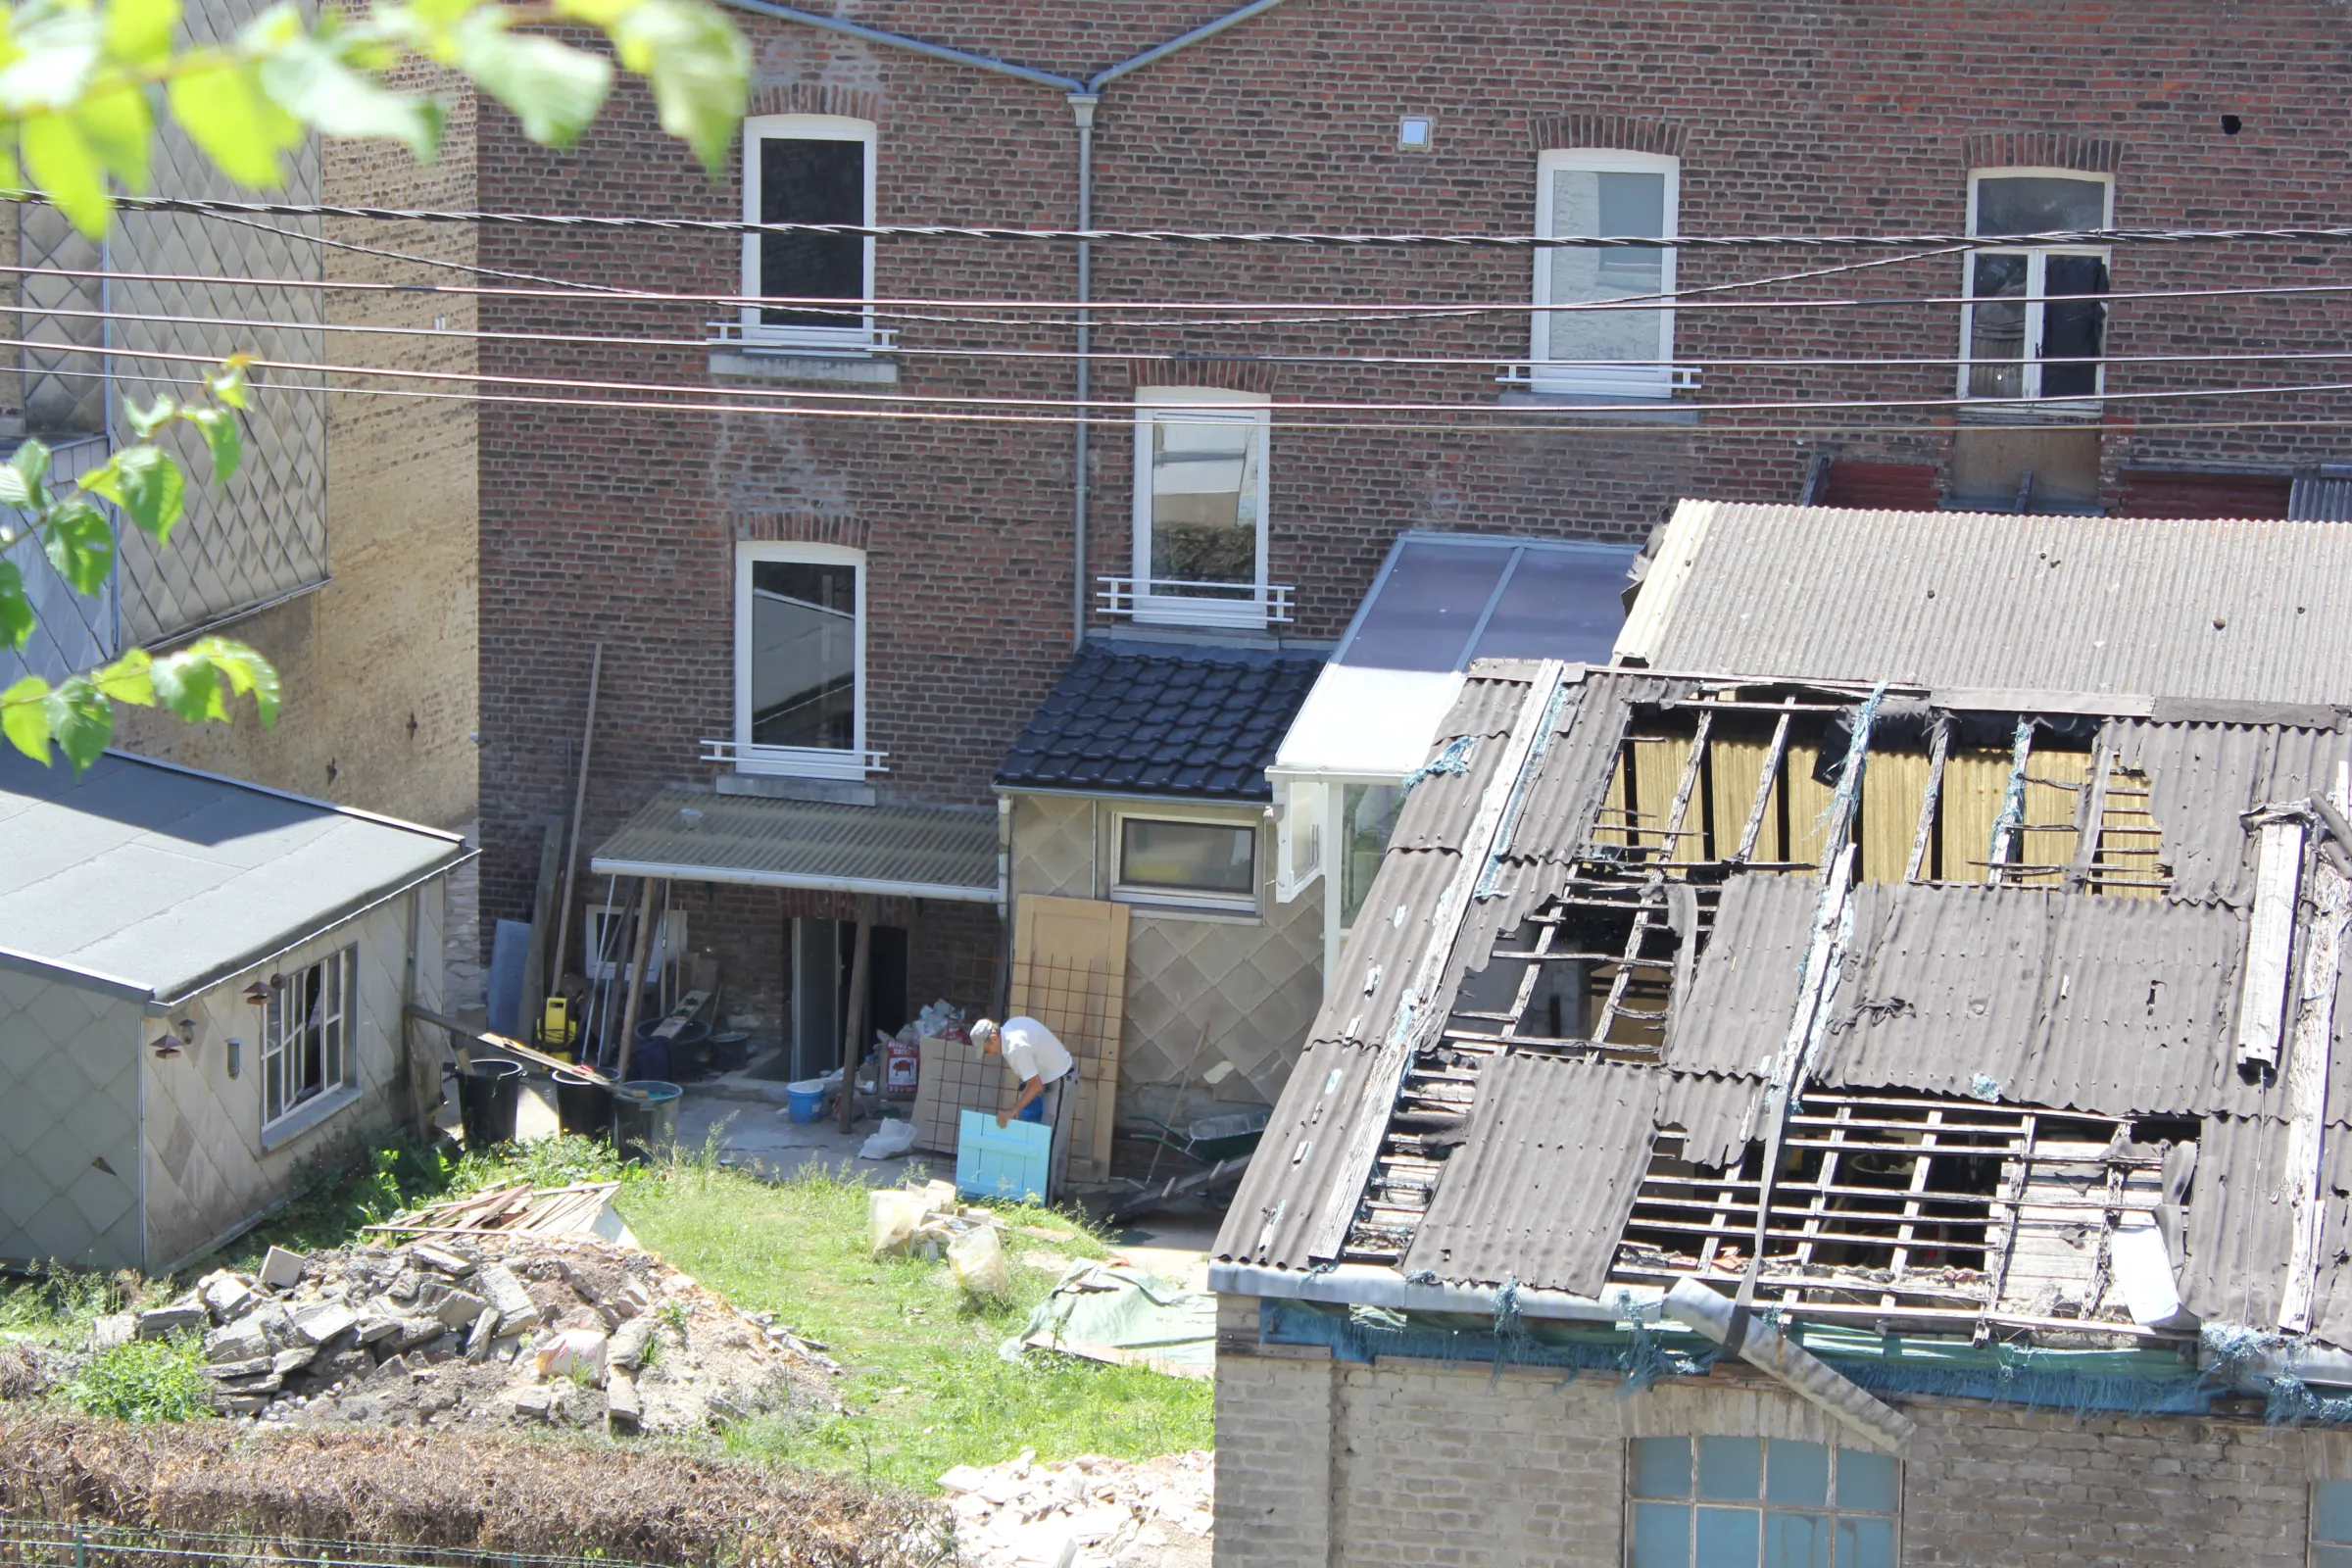 Residents rebuild flood-hit homes in Limbourg, Belgium June 15, 2022.